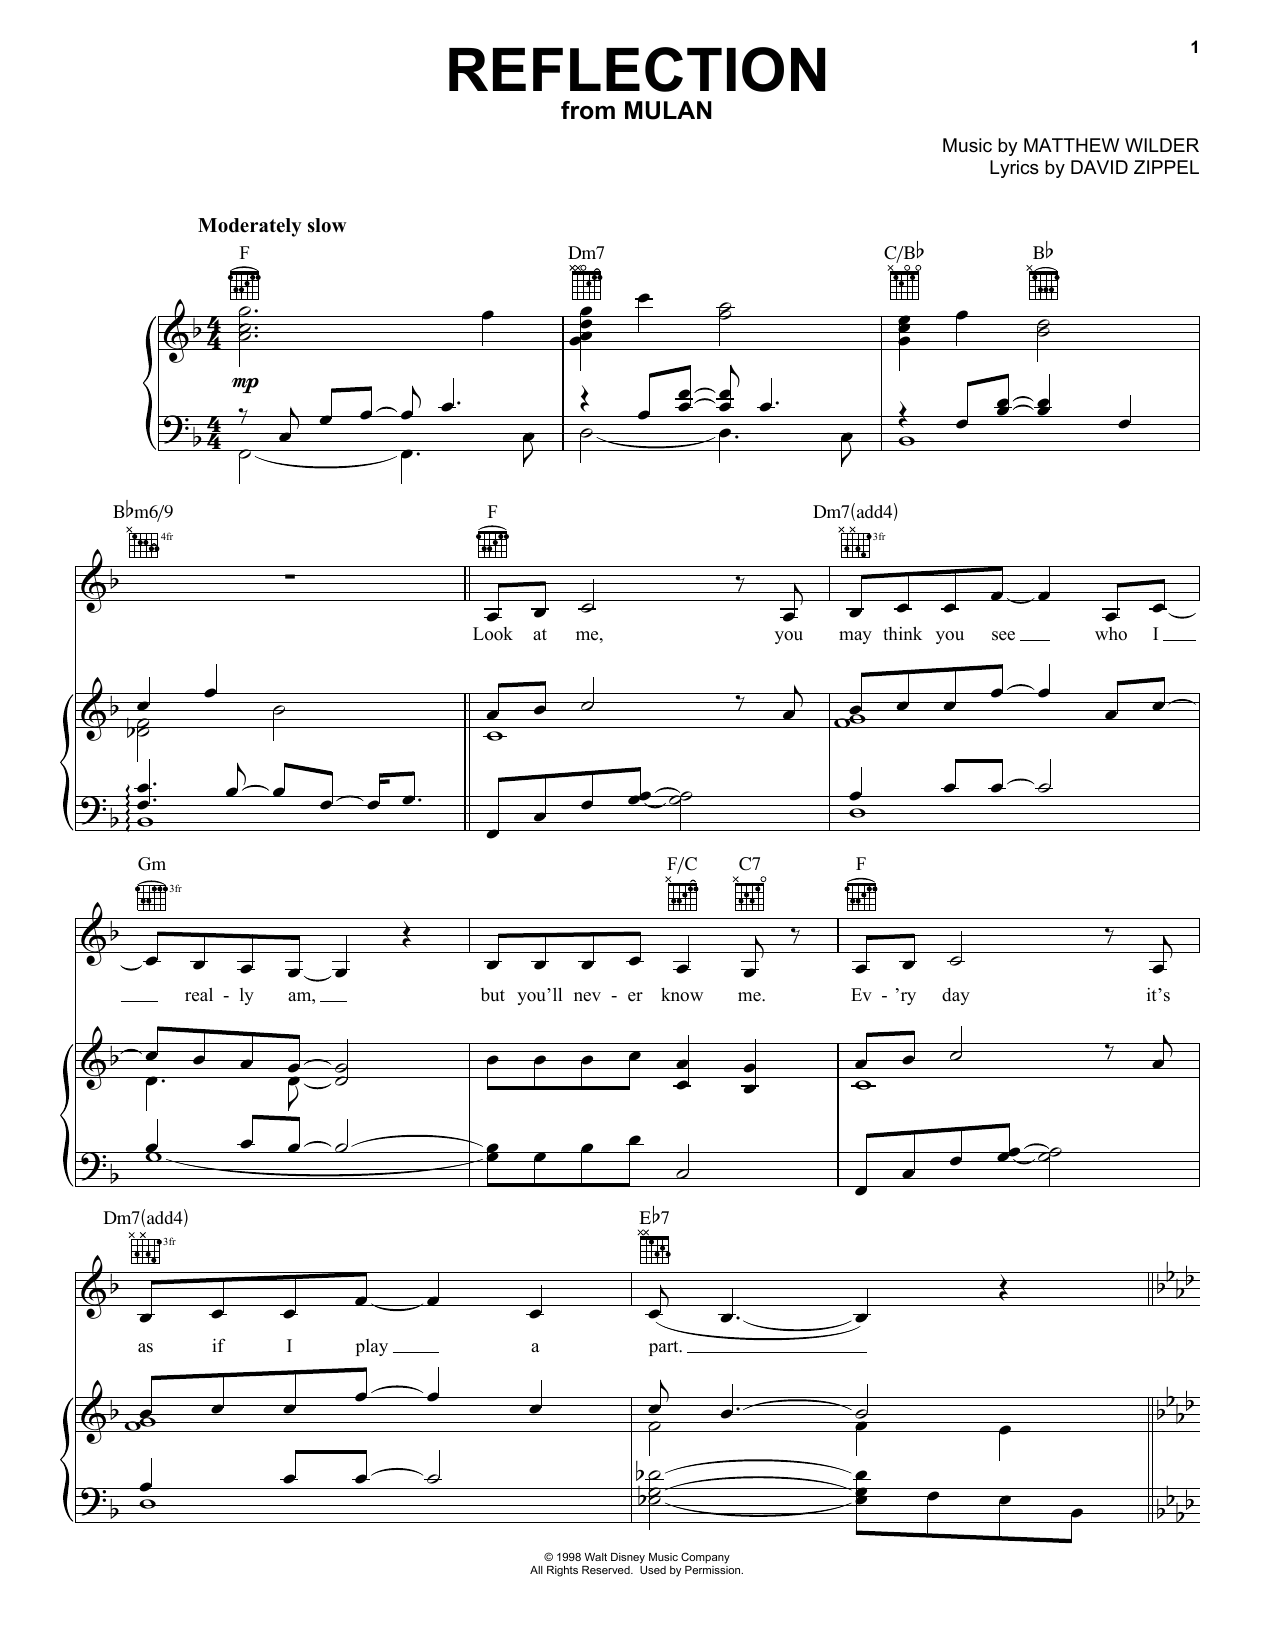 Christina Aguilera Reflection (Pop Version) (from Mulan) Sheet Music Notes & Chords for Melody Line, Lyrics & Chords - Download or Print PDF